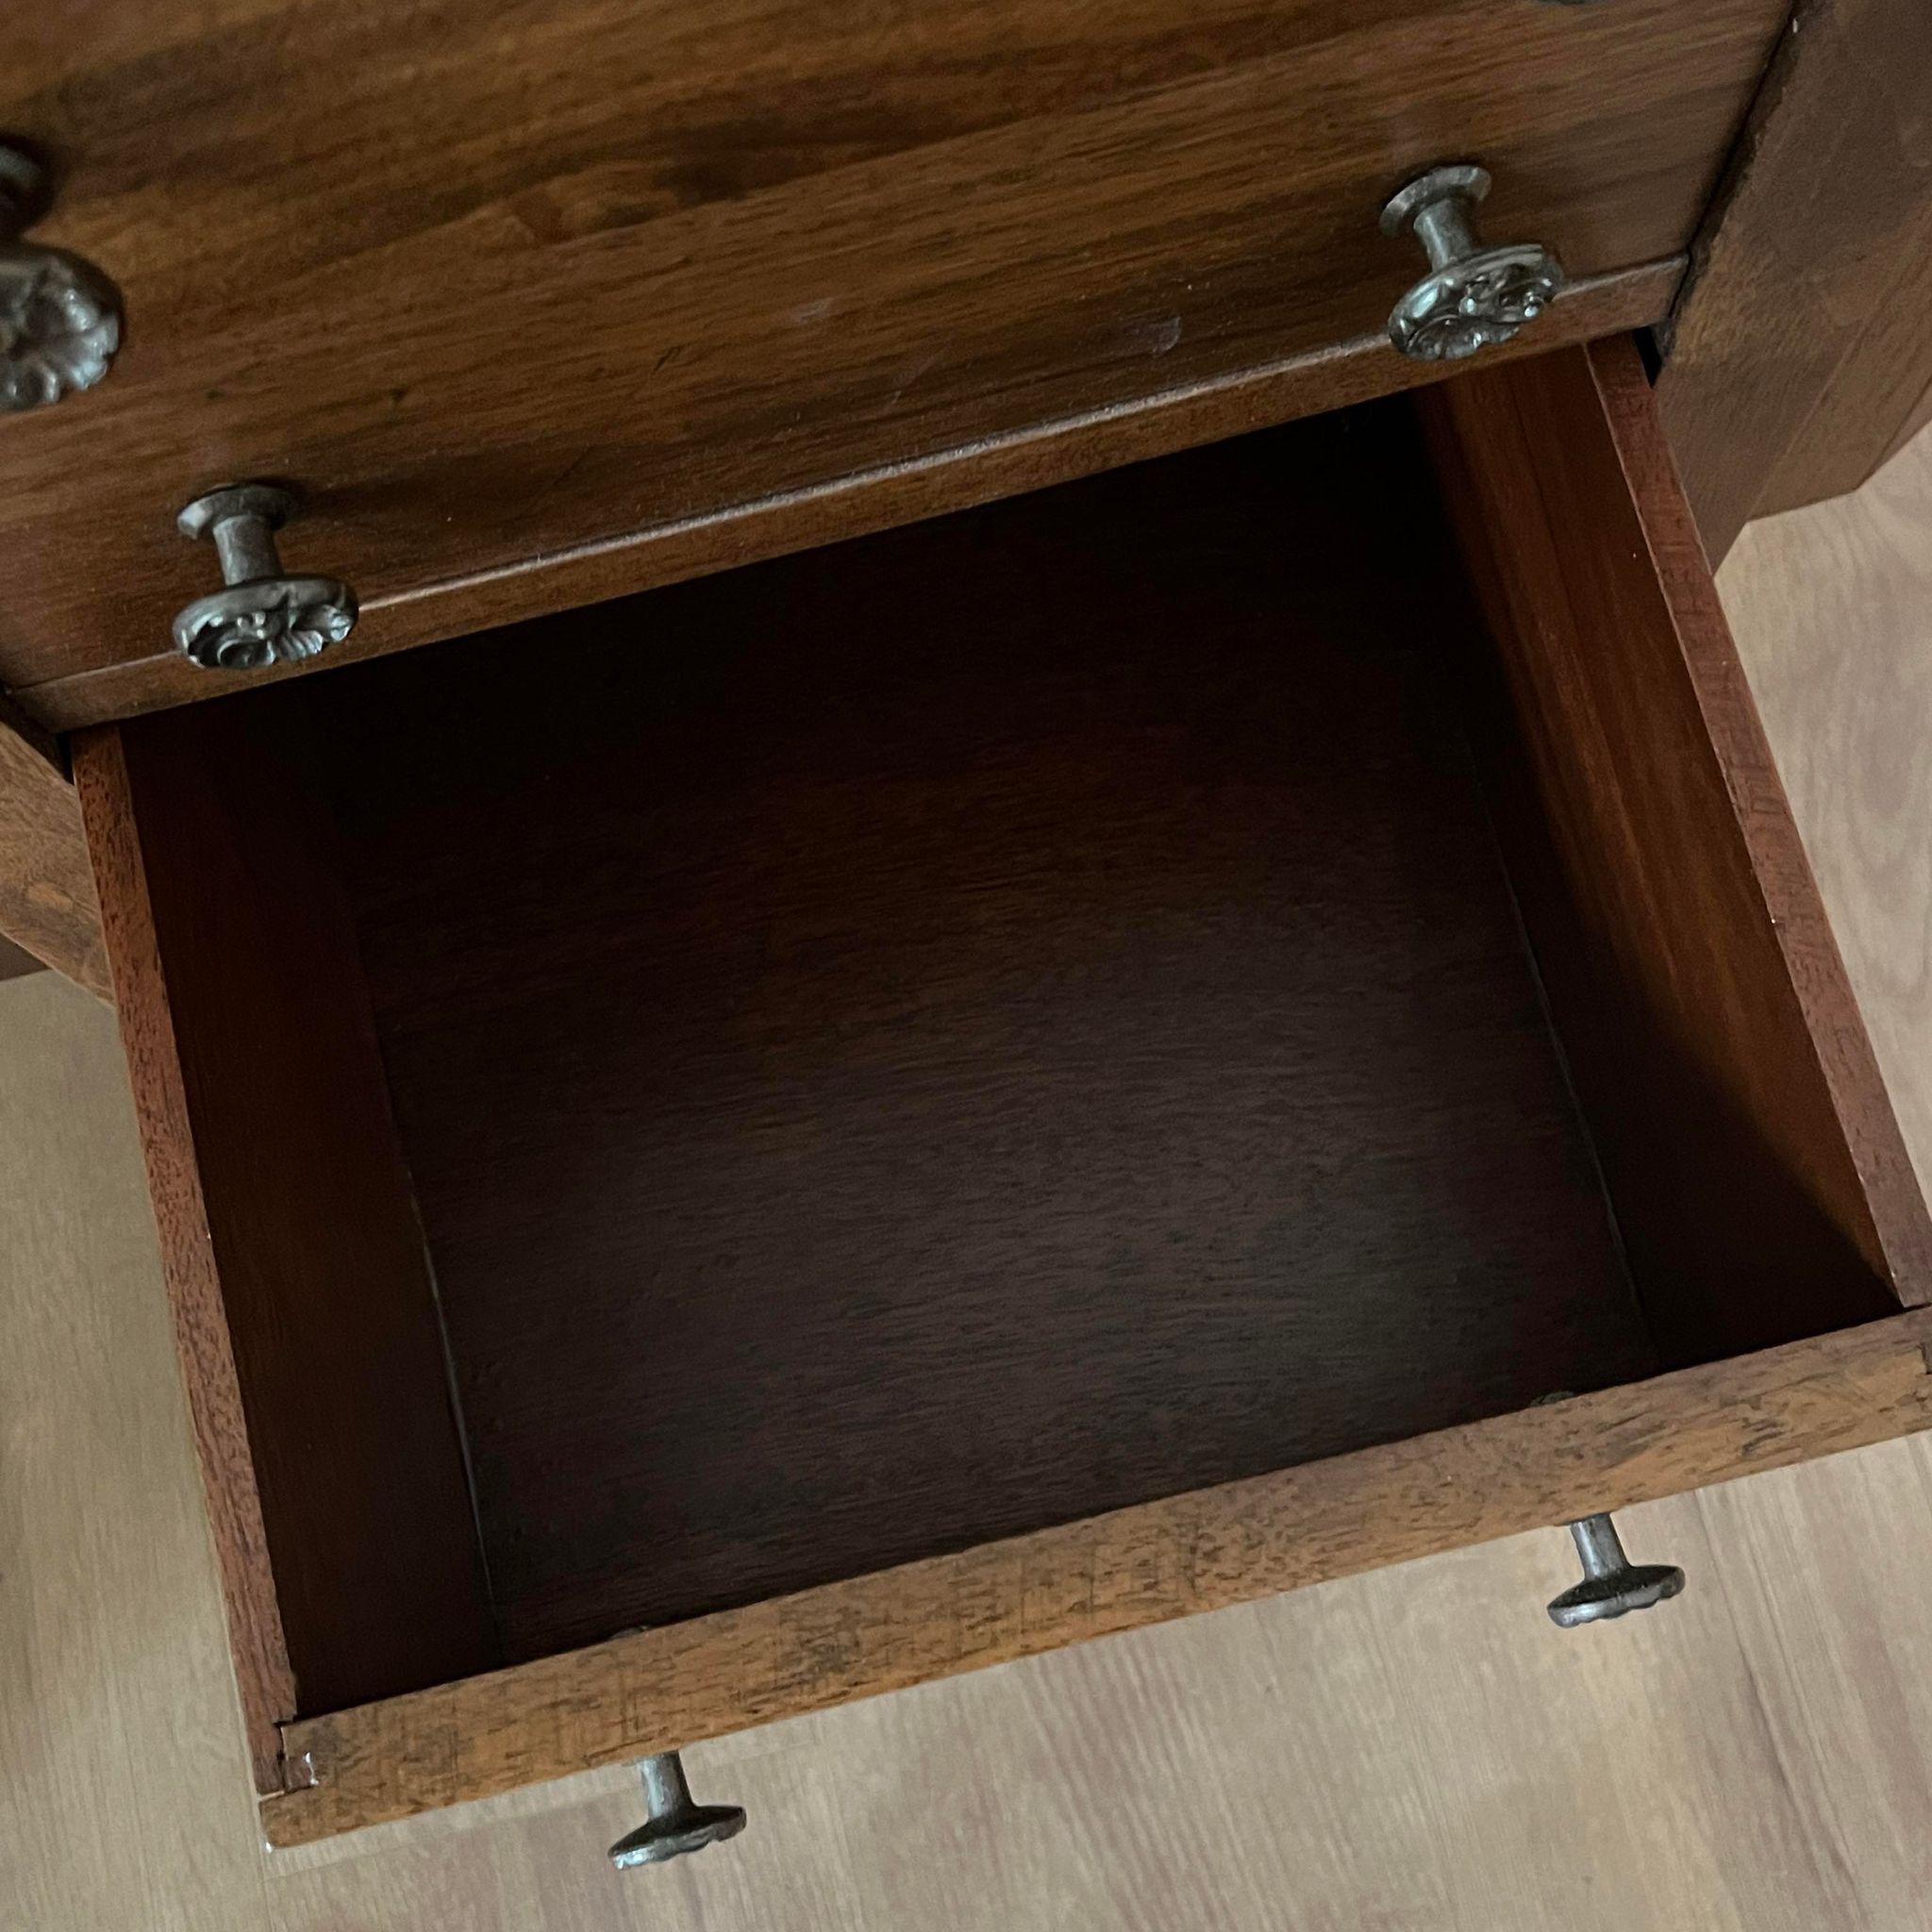 Vintage Wooden 3 Drawer Sewing Cabinet